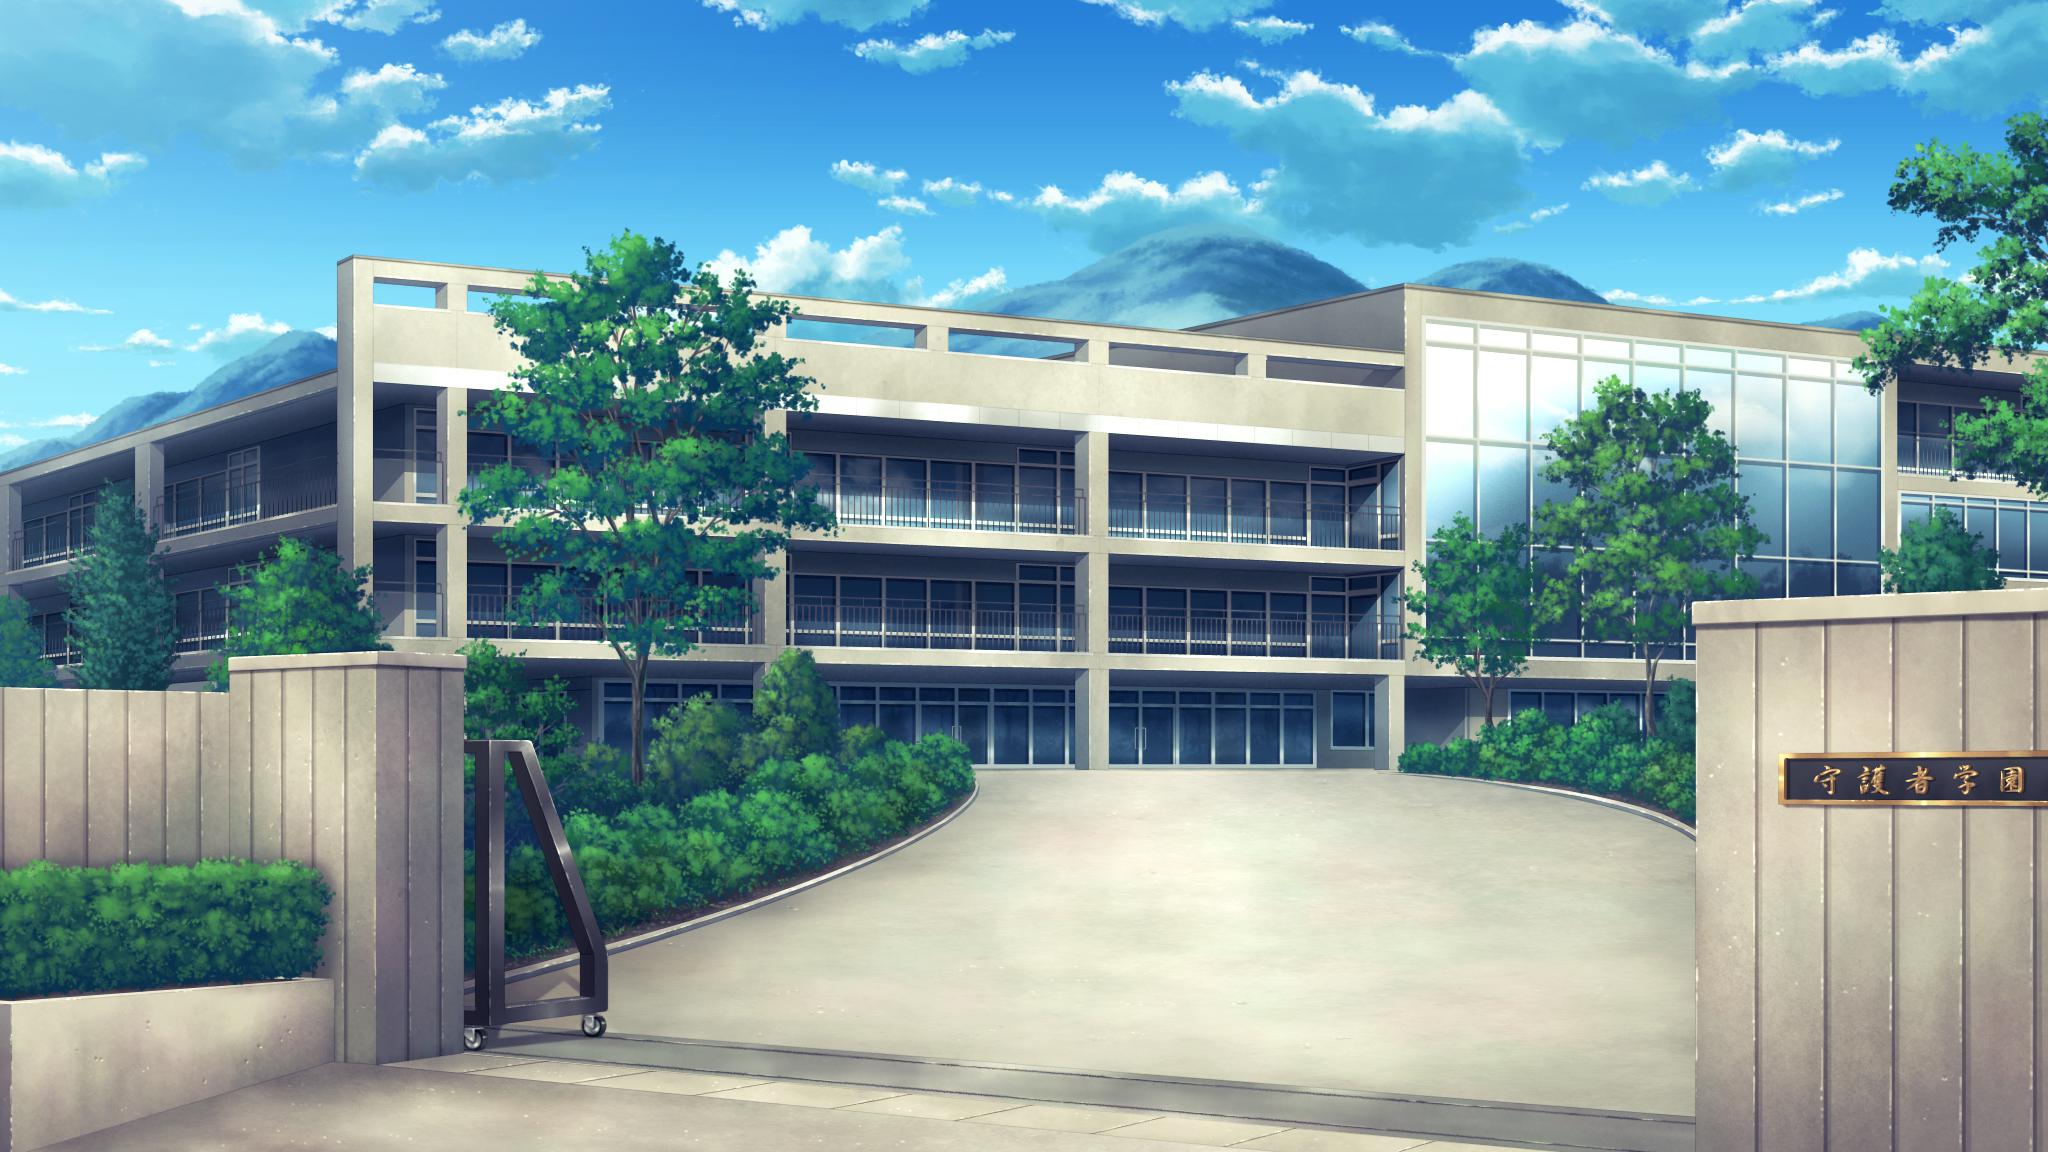 School Anime Scenery Background Wallpaper. Resources: Wallpaper